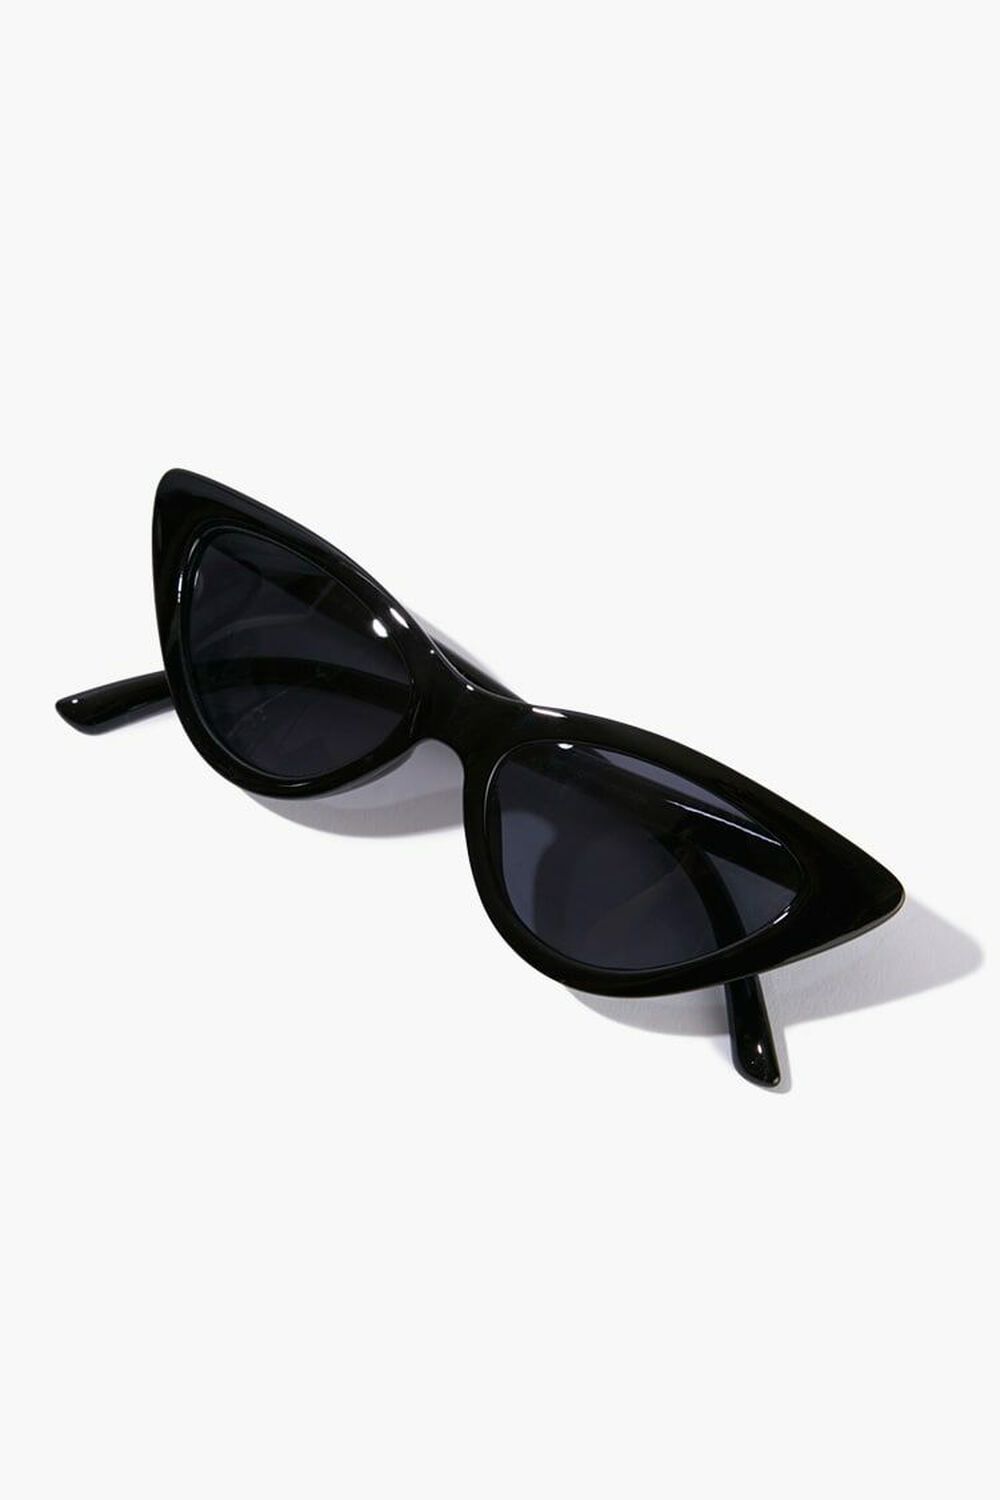 BLACK Skinny Cat-Eye Sunglasses, image 3